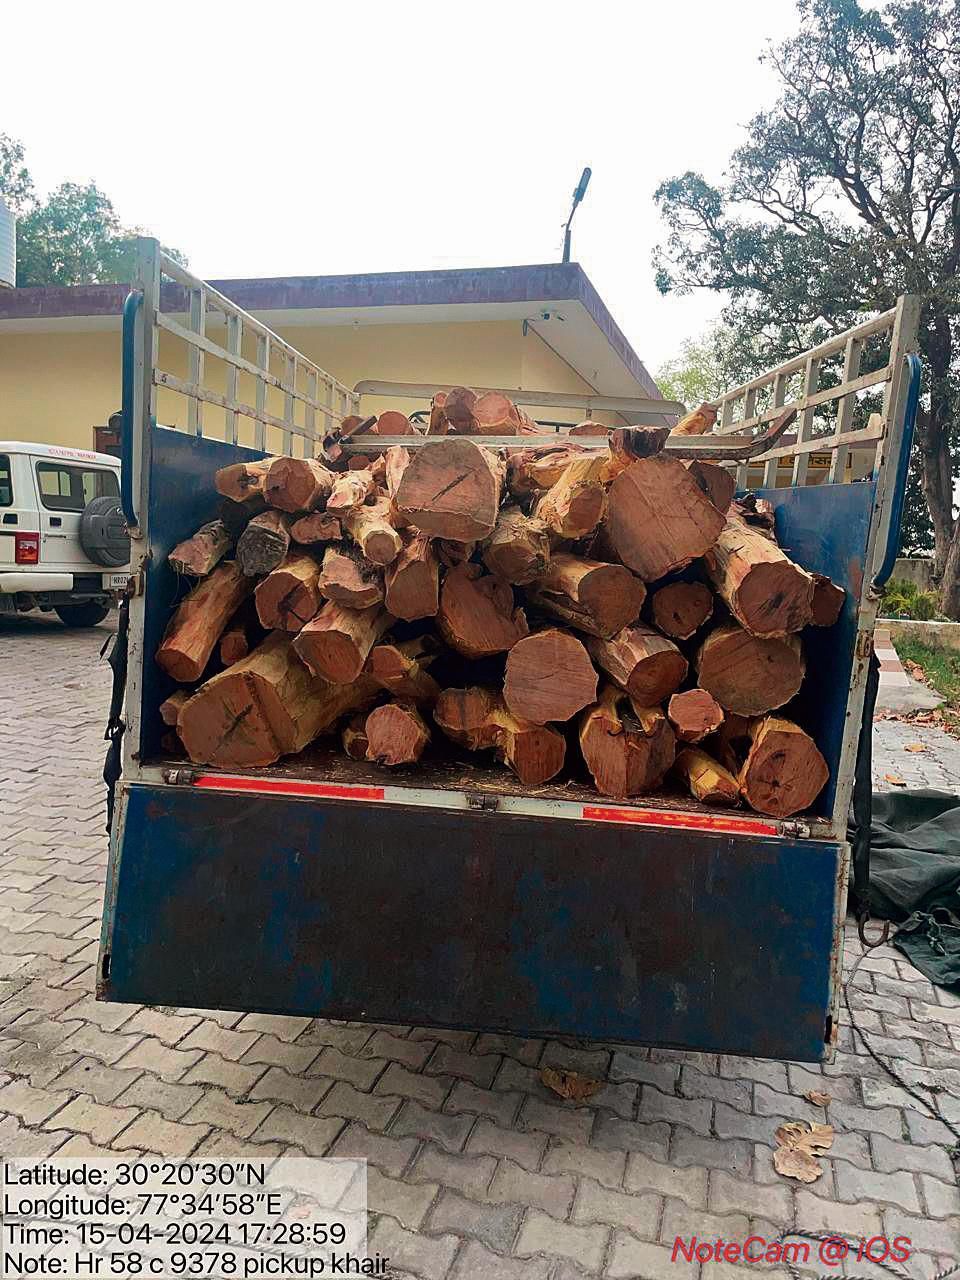 Yamunanagar: 2 held with 15 quintals of illegal khair wood